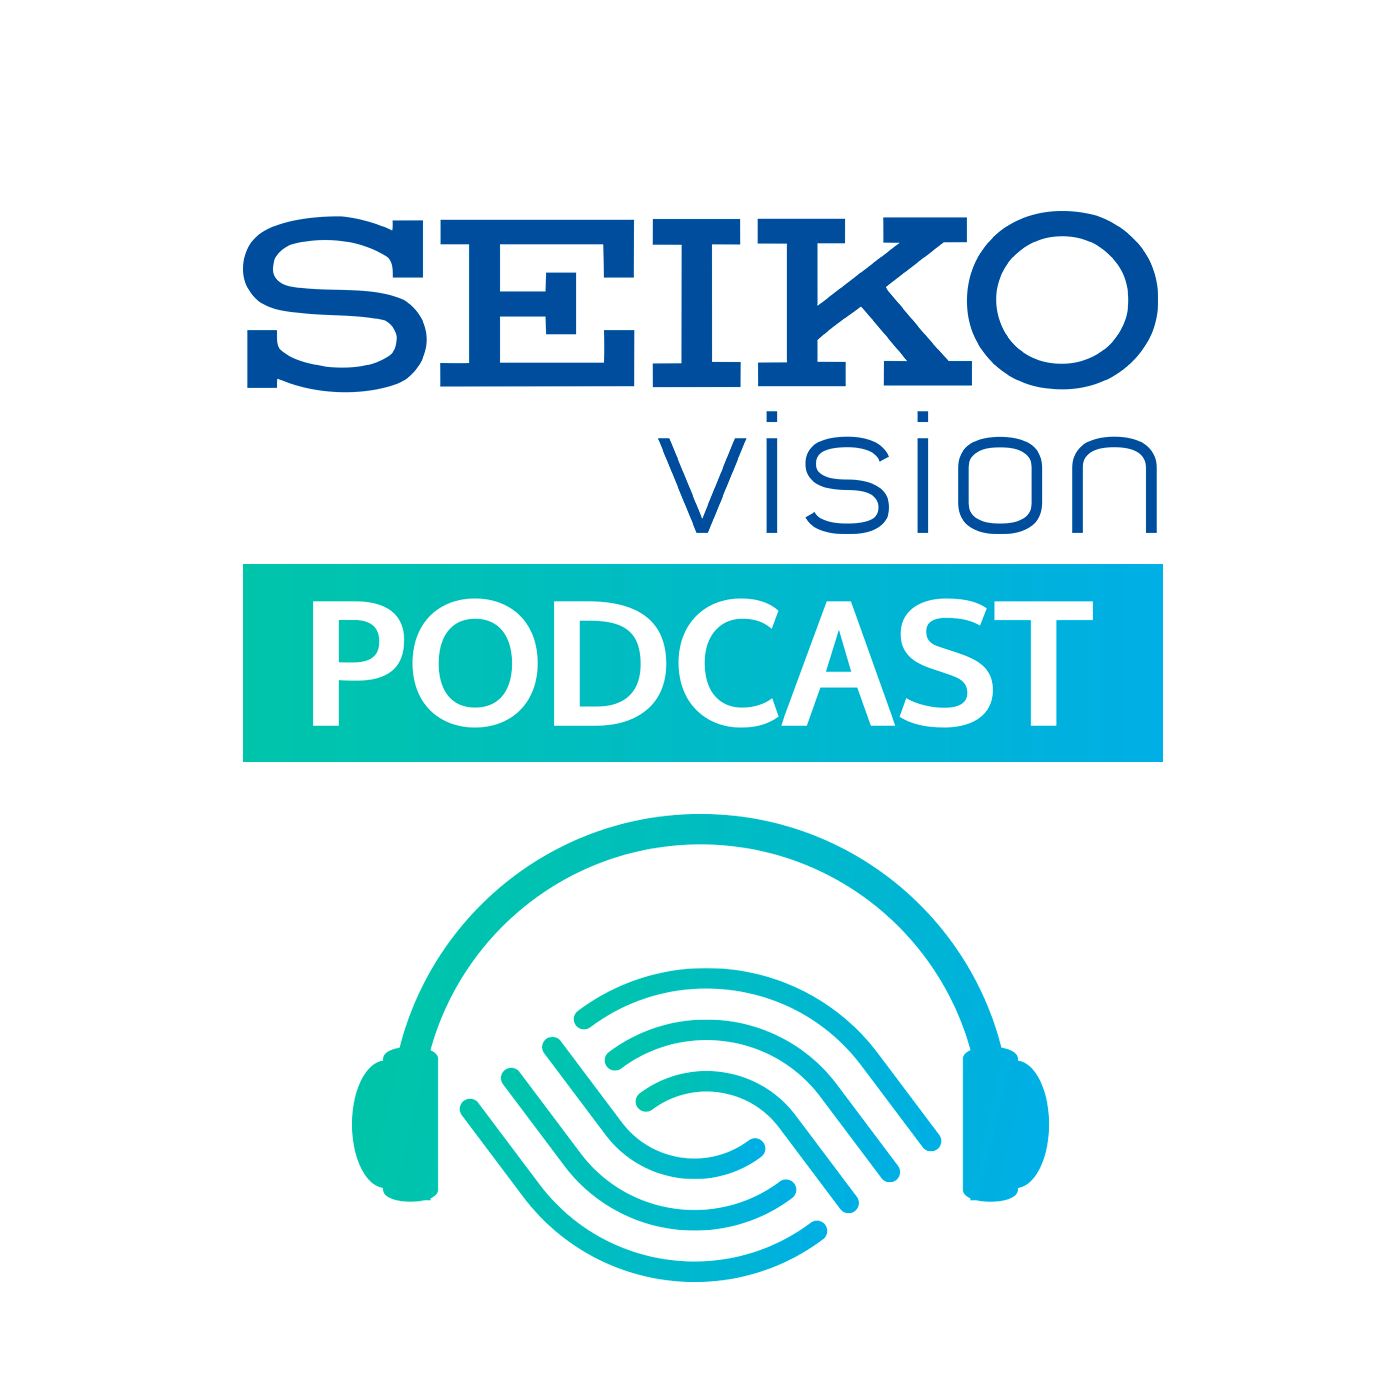 SeikoVision Podcast